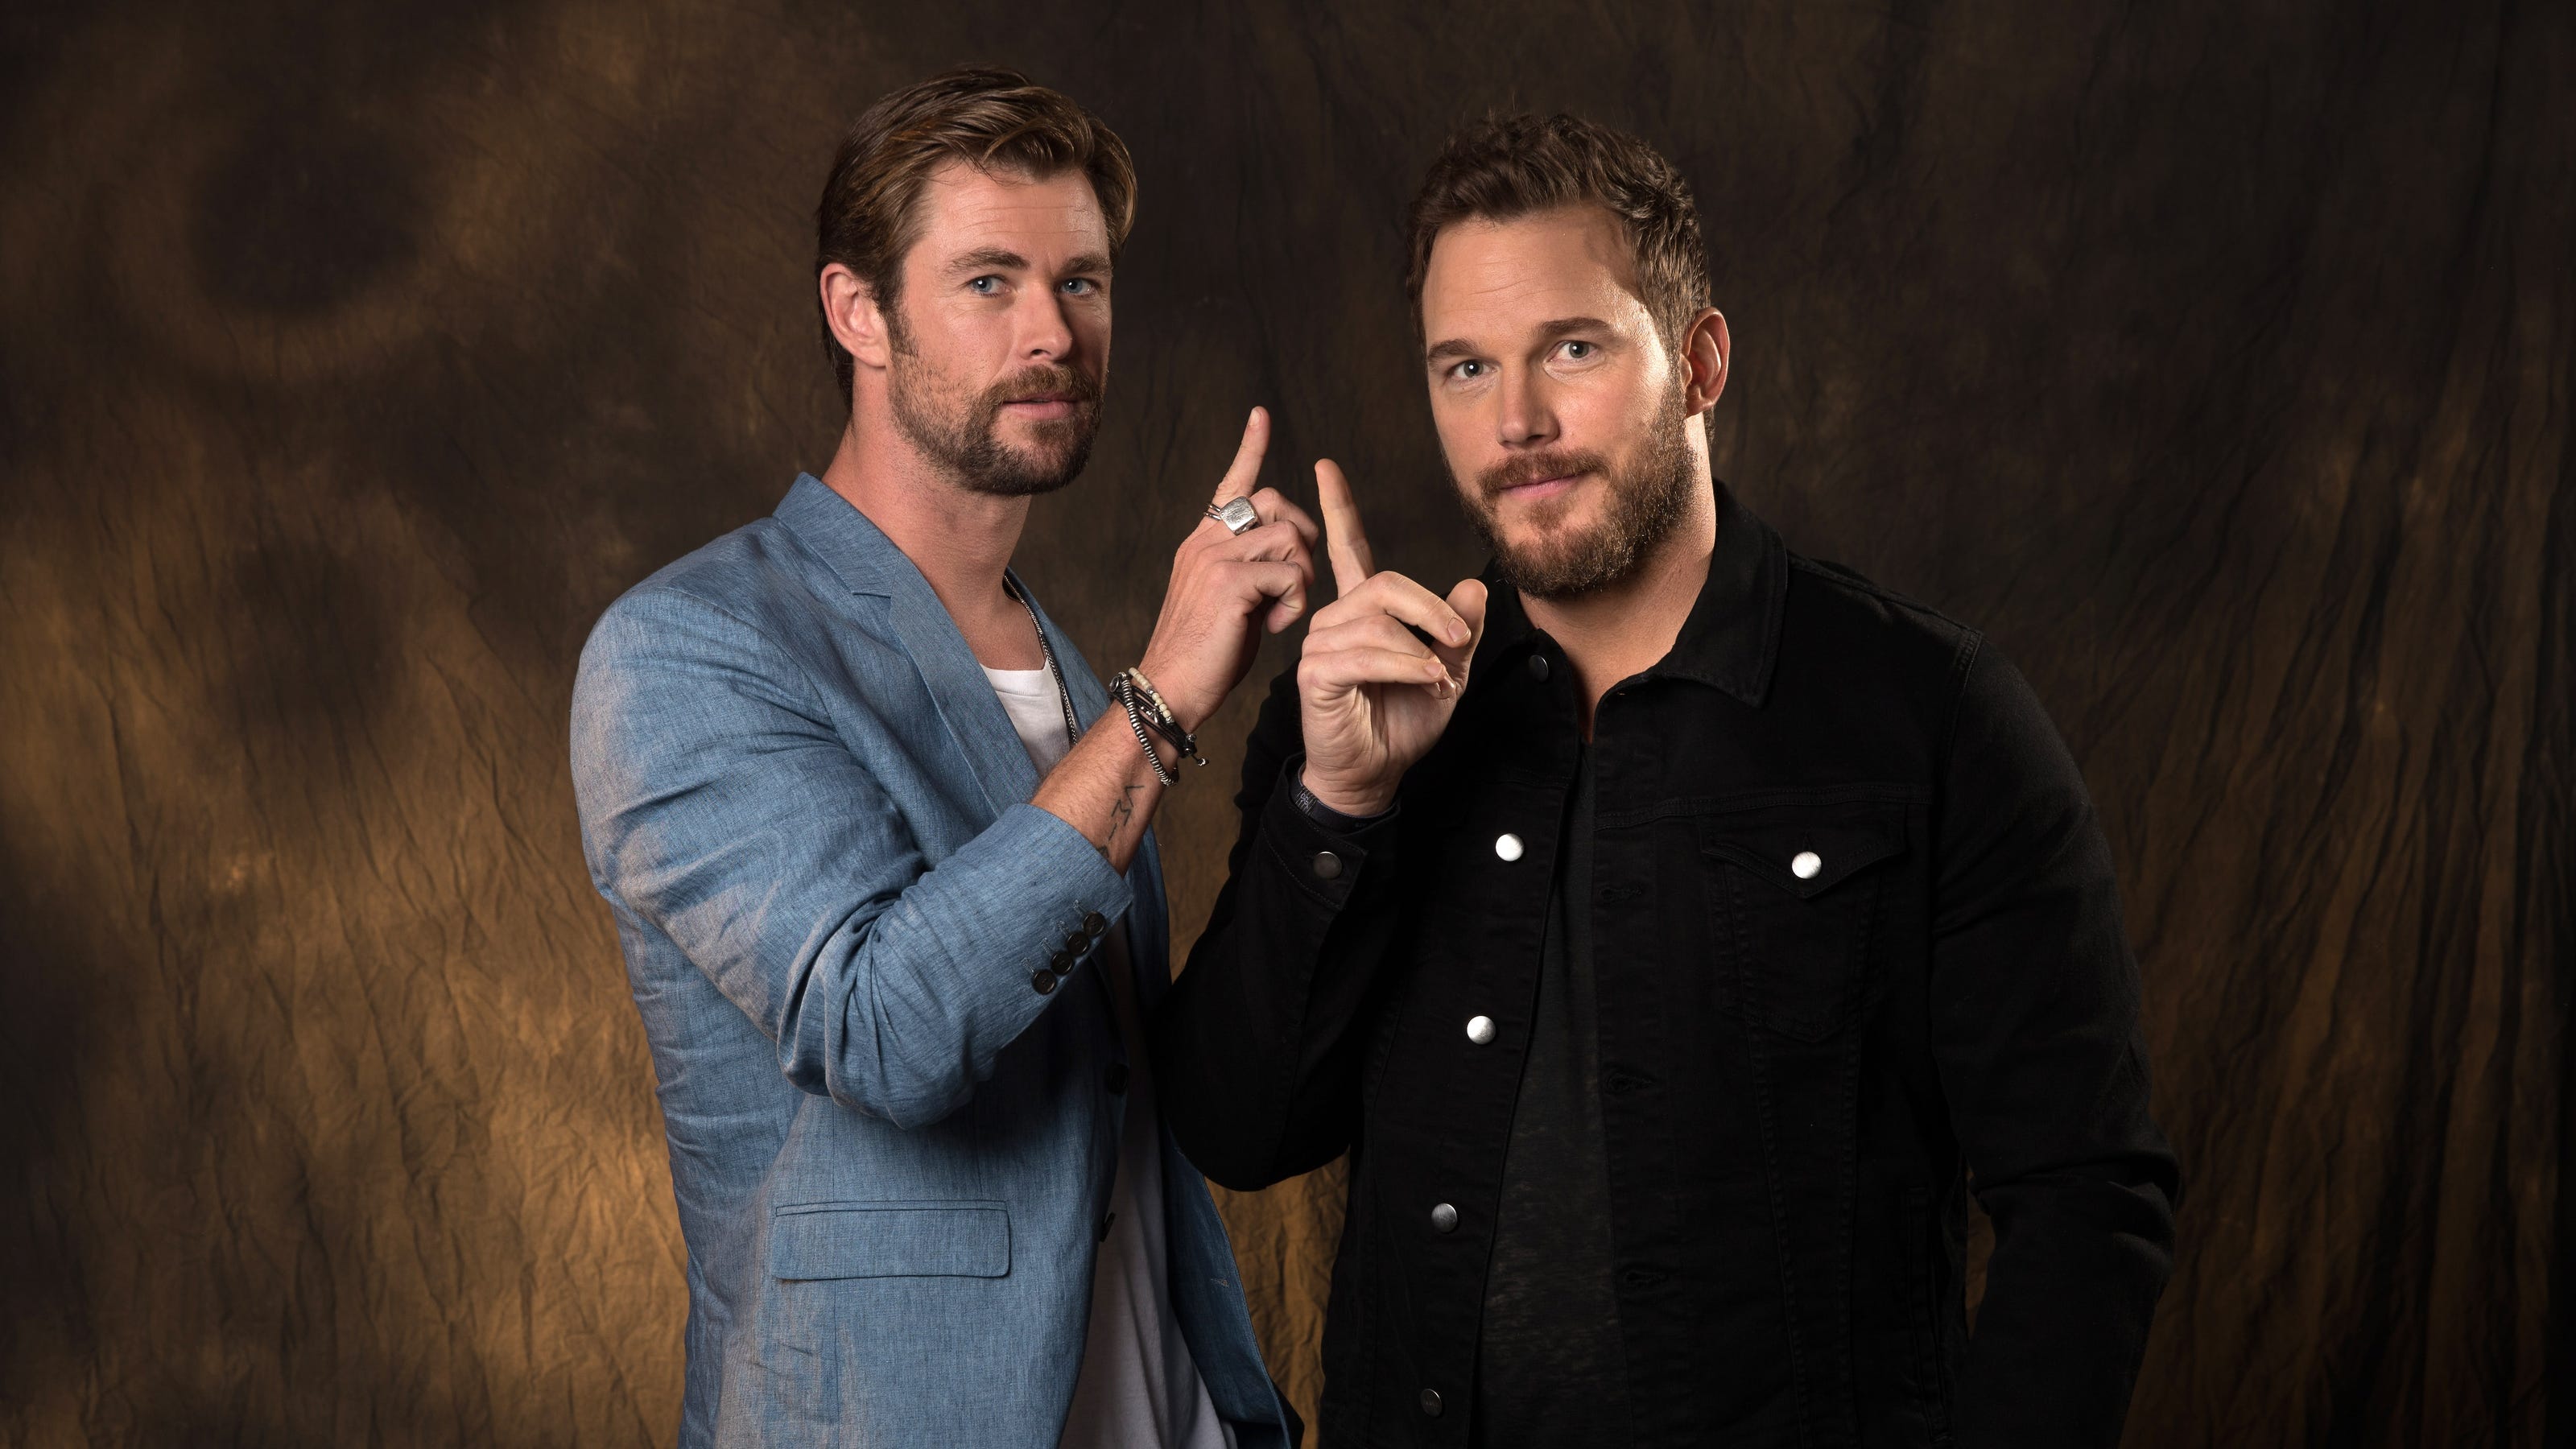 Chris Hemsworth trolls Chris Evans on his 40th birthday, posts photo with Chris Pratt - USA TODAY